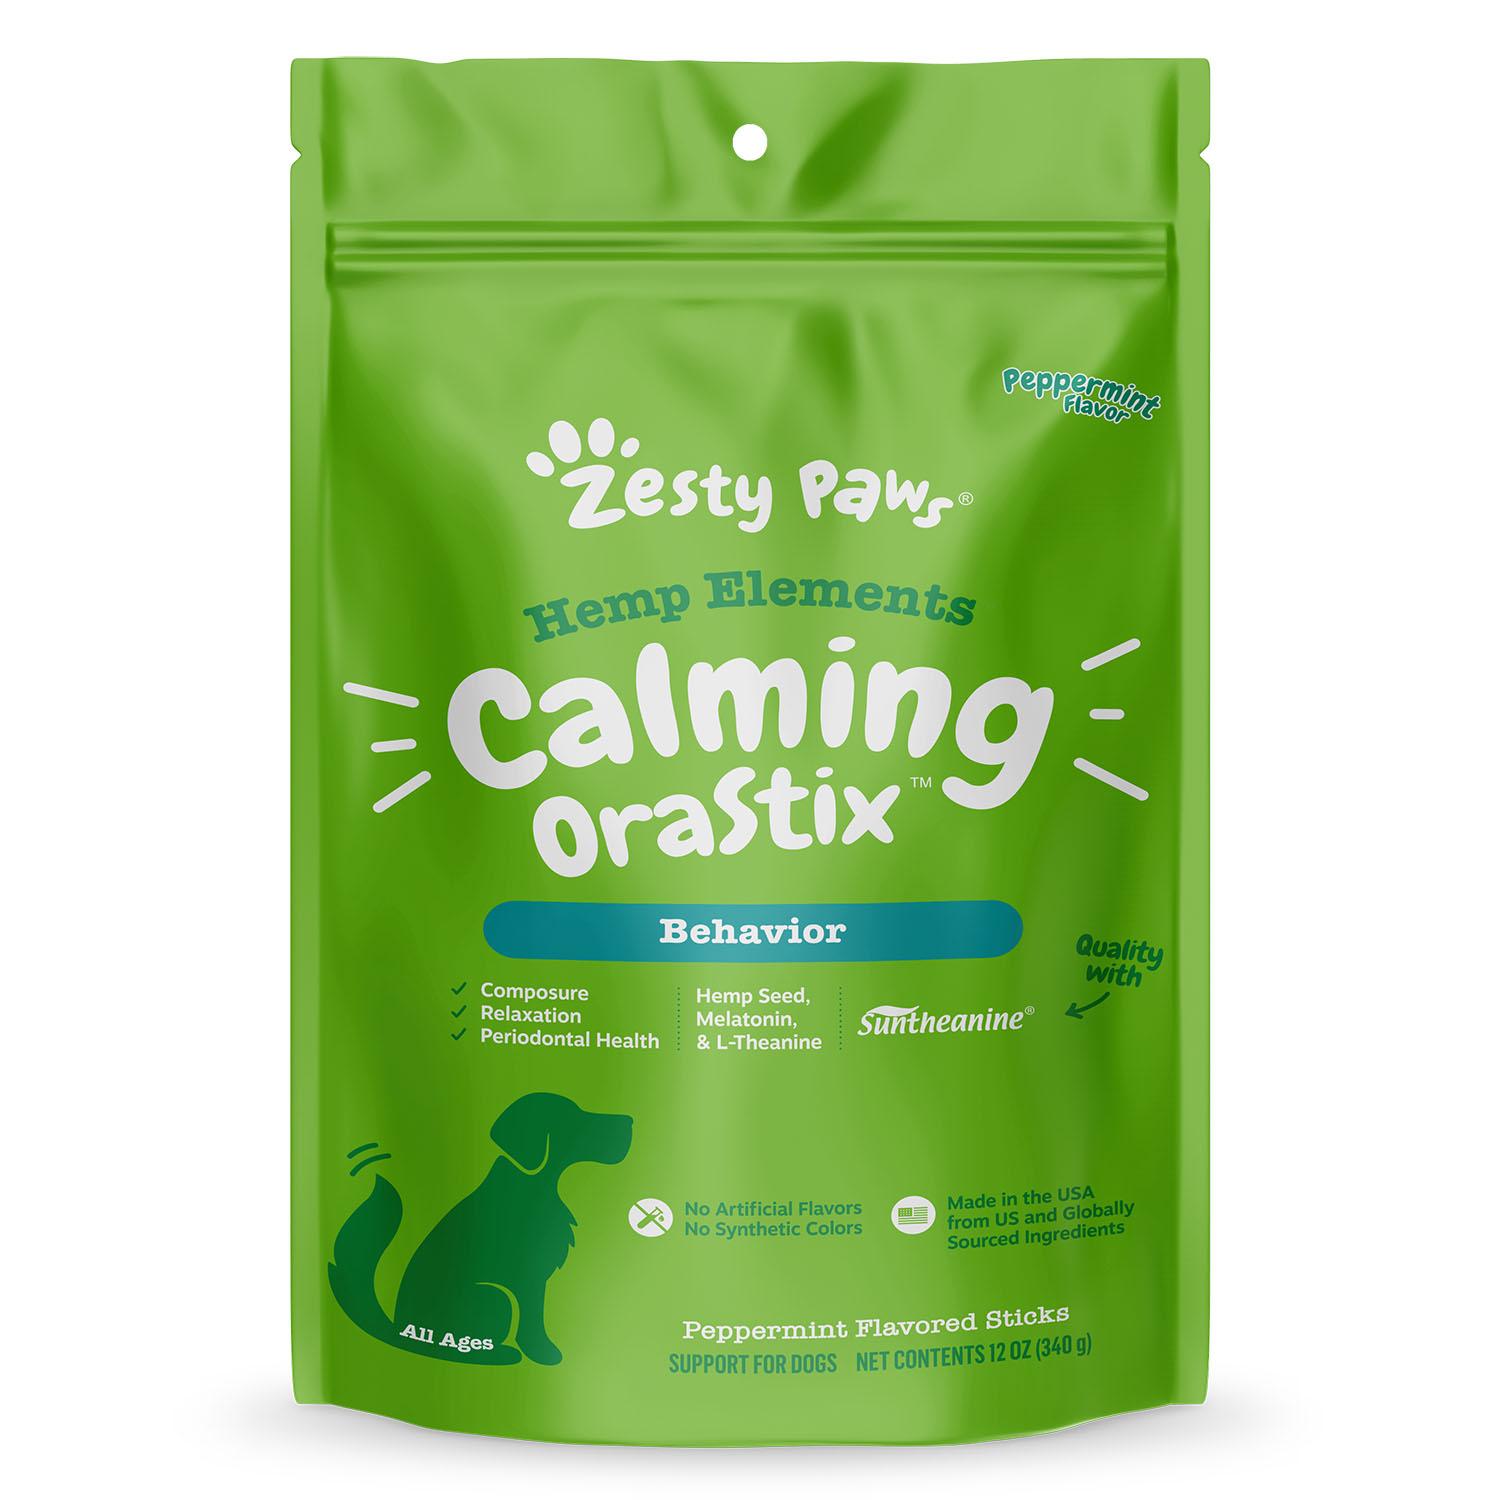 Zesty Paws Hemp Elements OraStix Calming Dog Chews - Peppermint Flavored